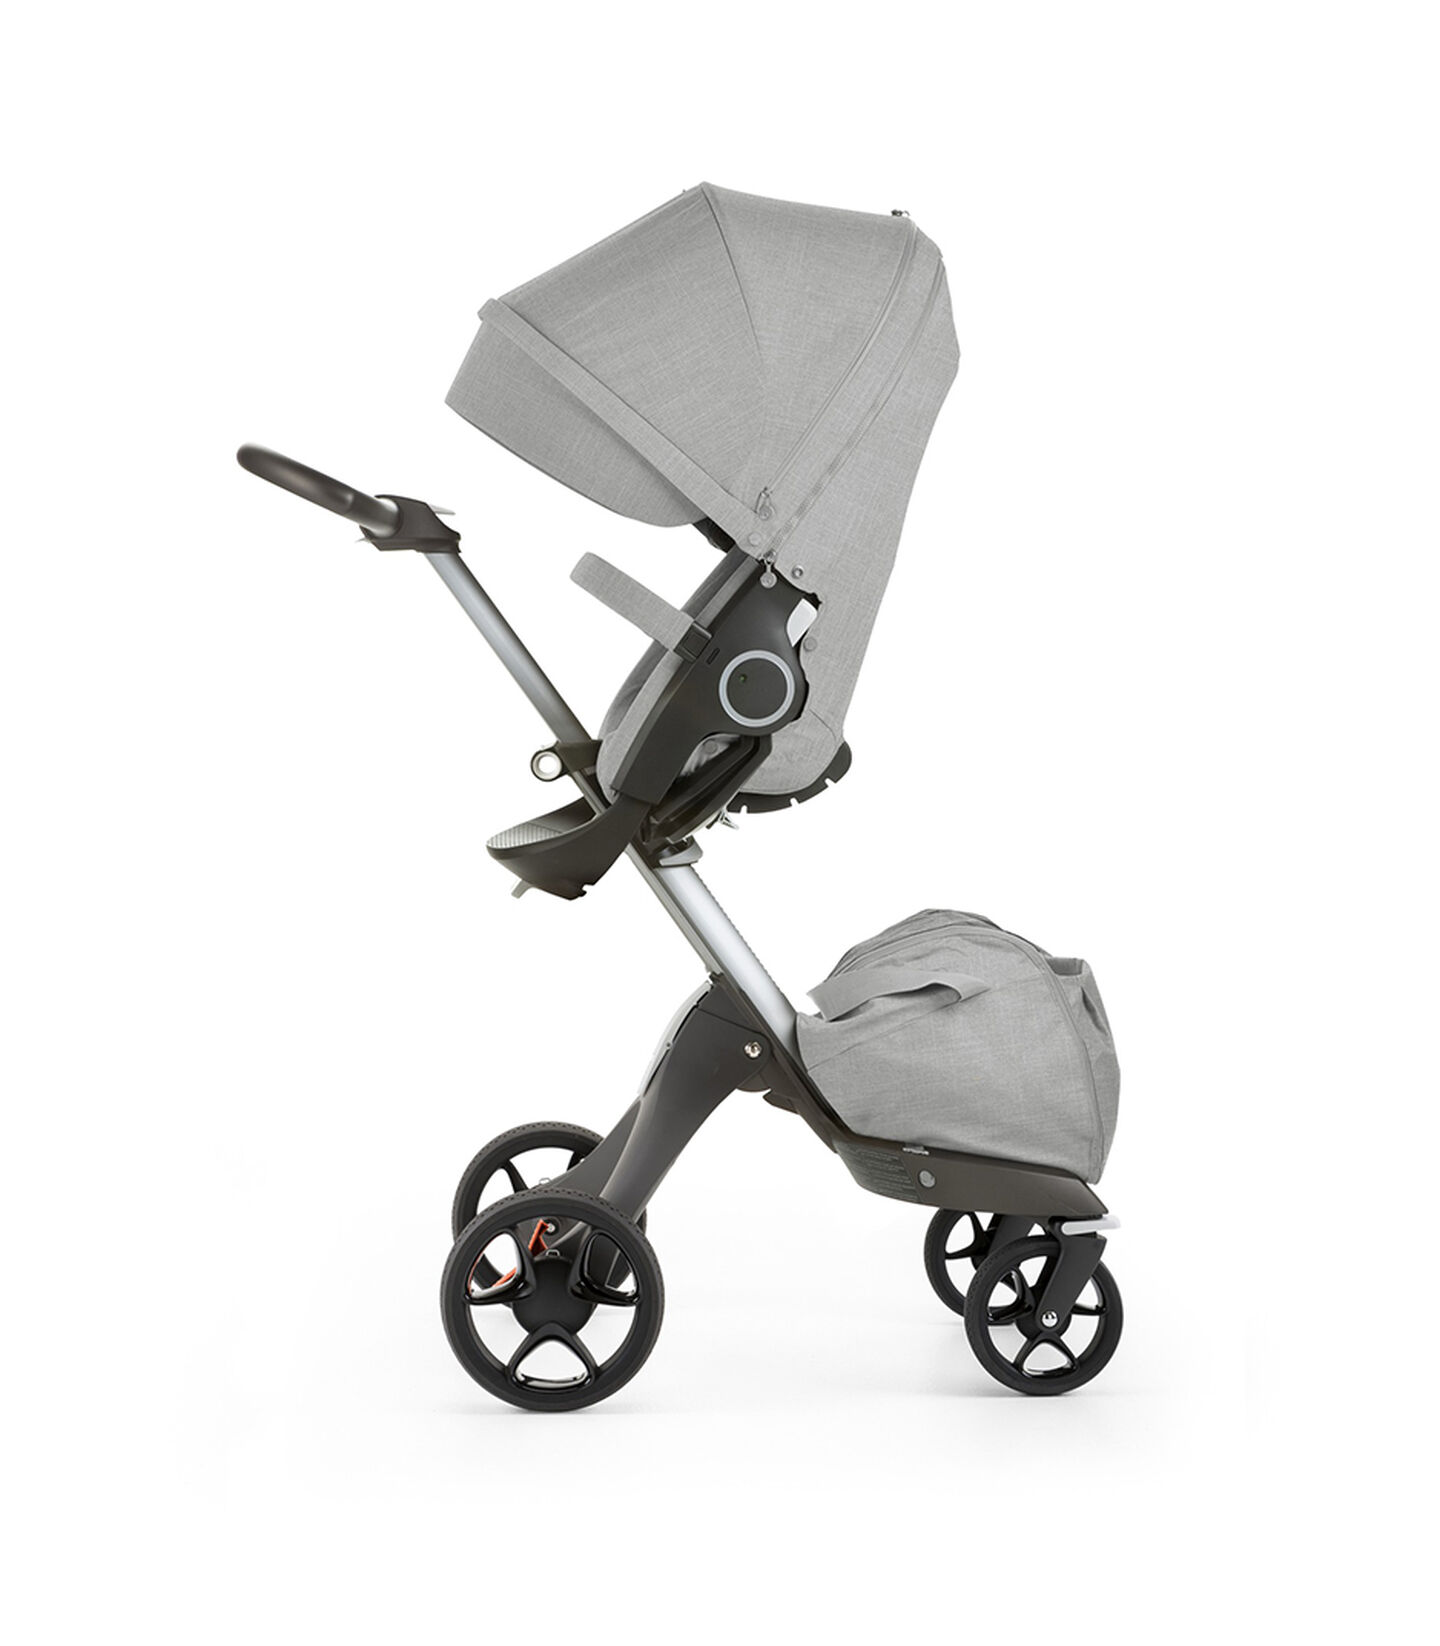 Stokke® Xplory® with Stokke® Stroller Seat, parent facing, active position. Grey Melange. New wheels 2016. view 2